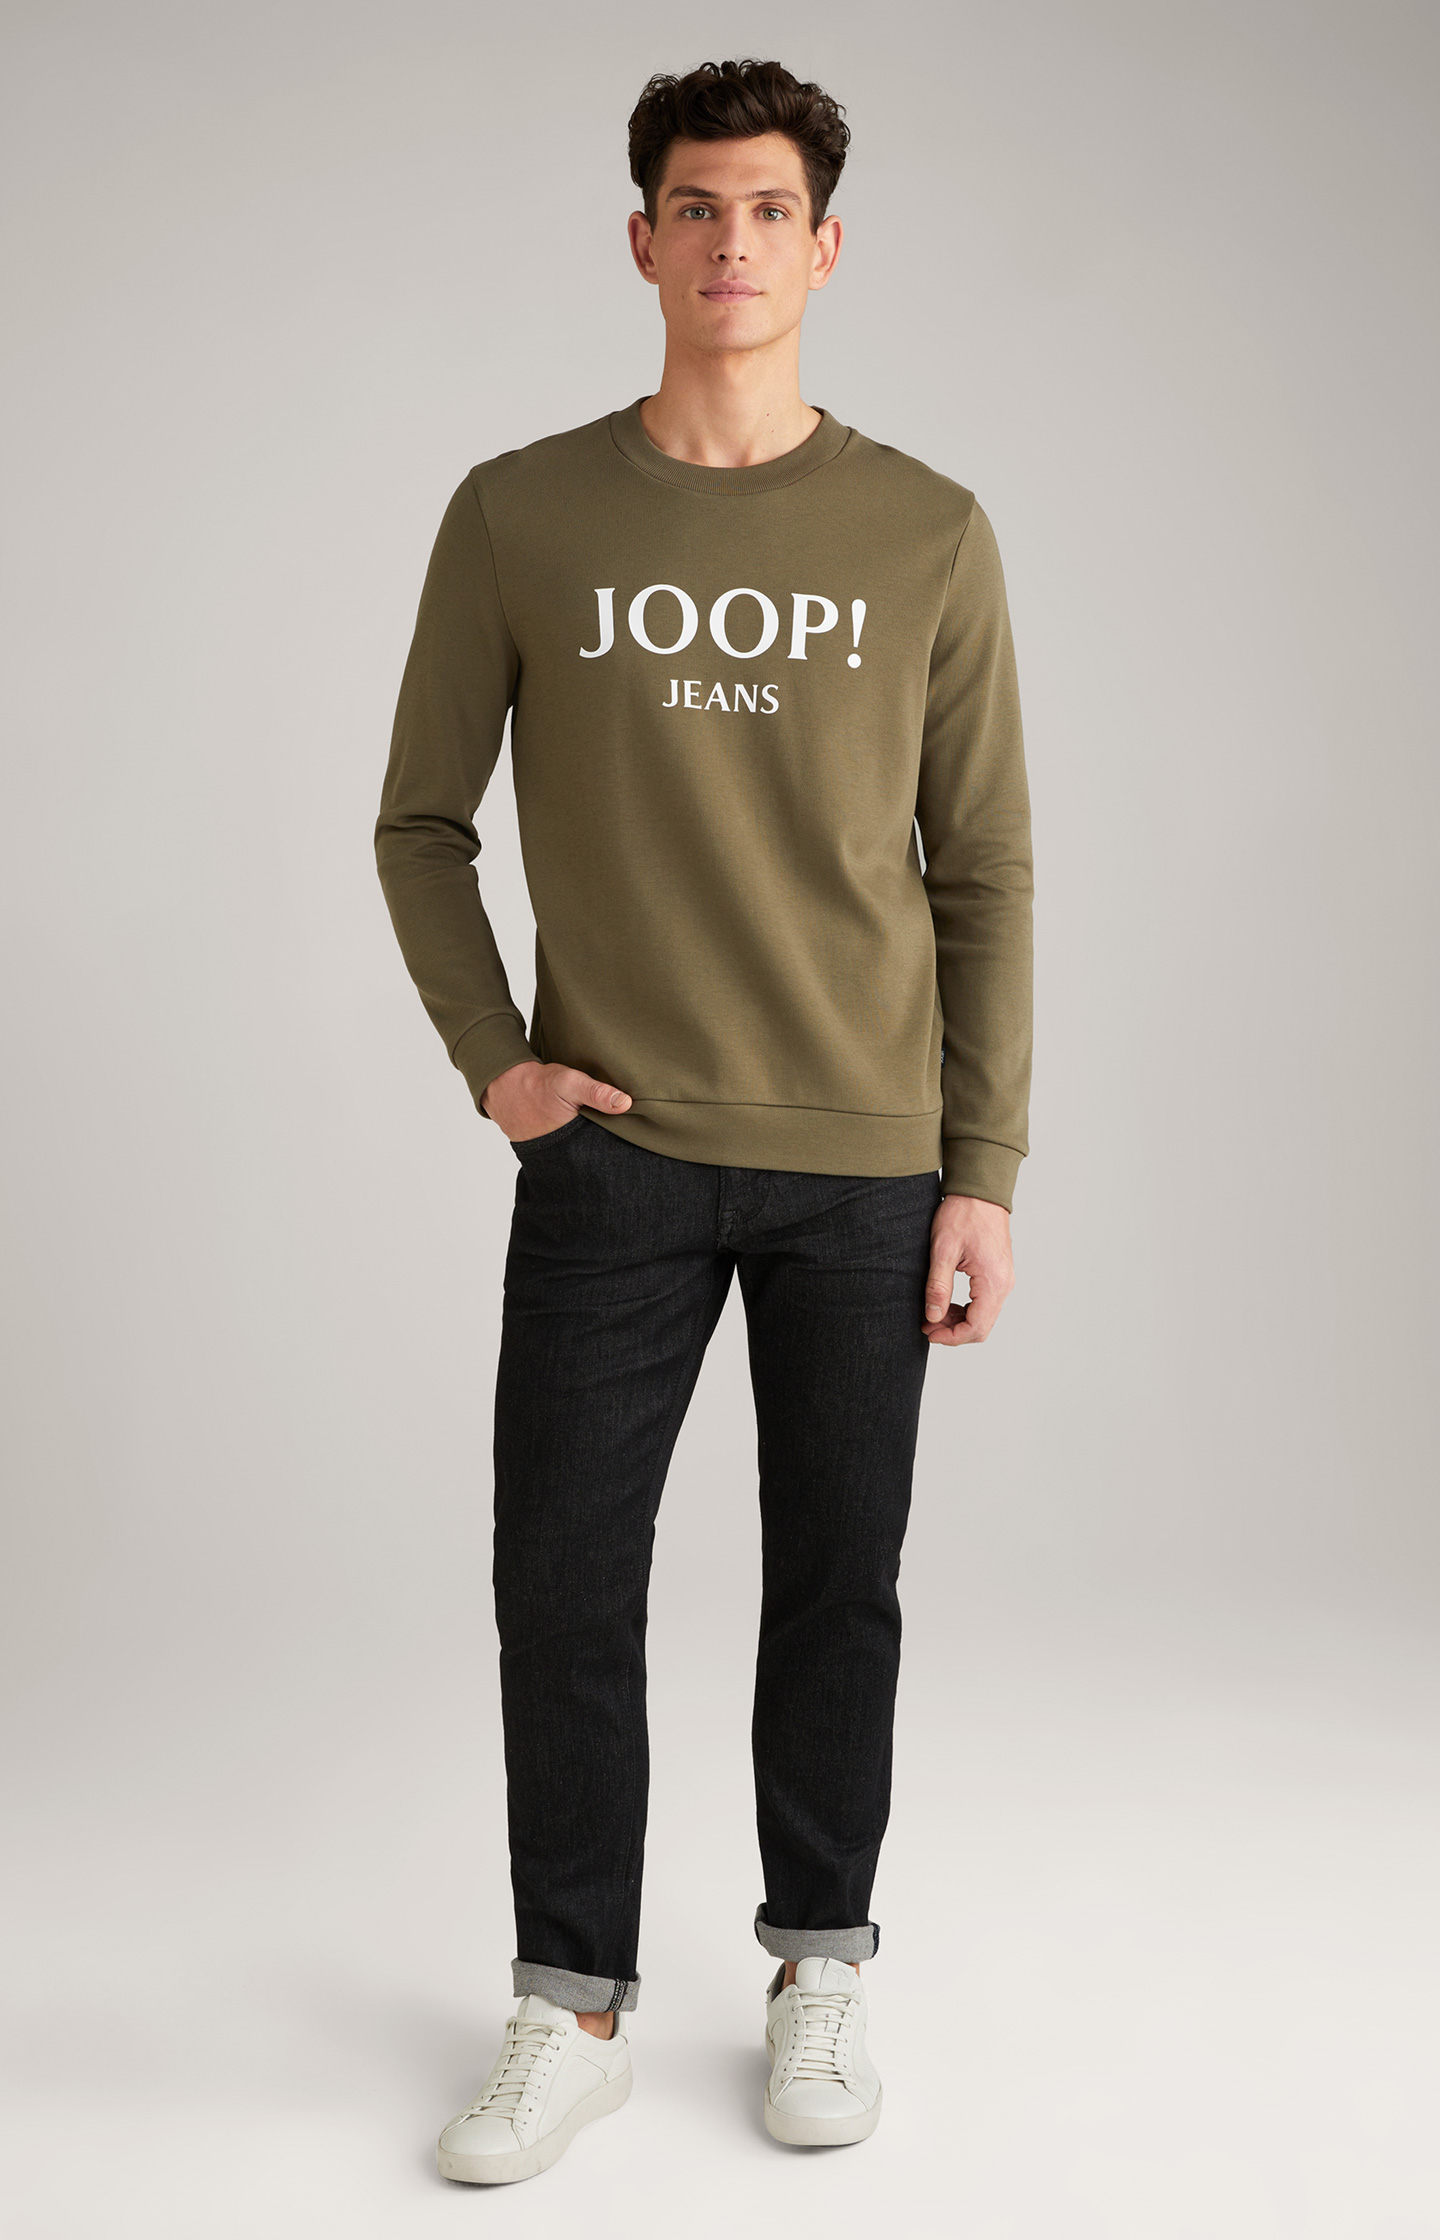 Sweatshirt Alfred in JOOP! Olivgrün - Online-Shop im